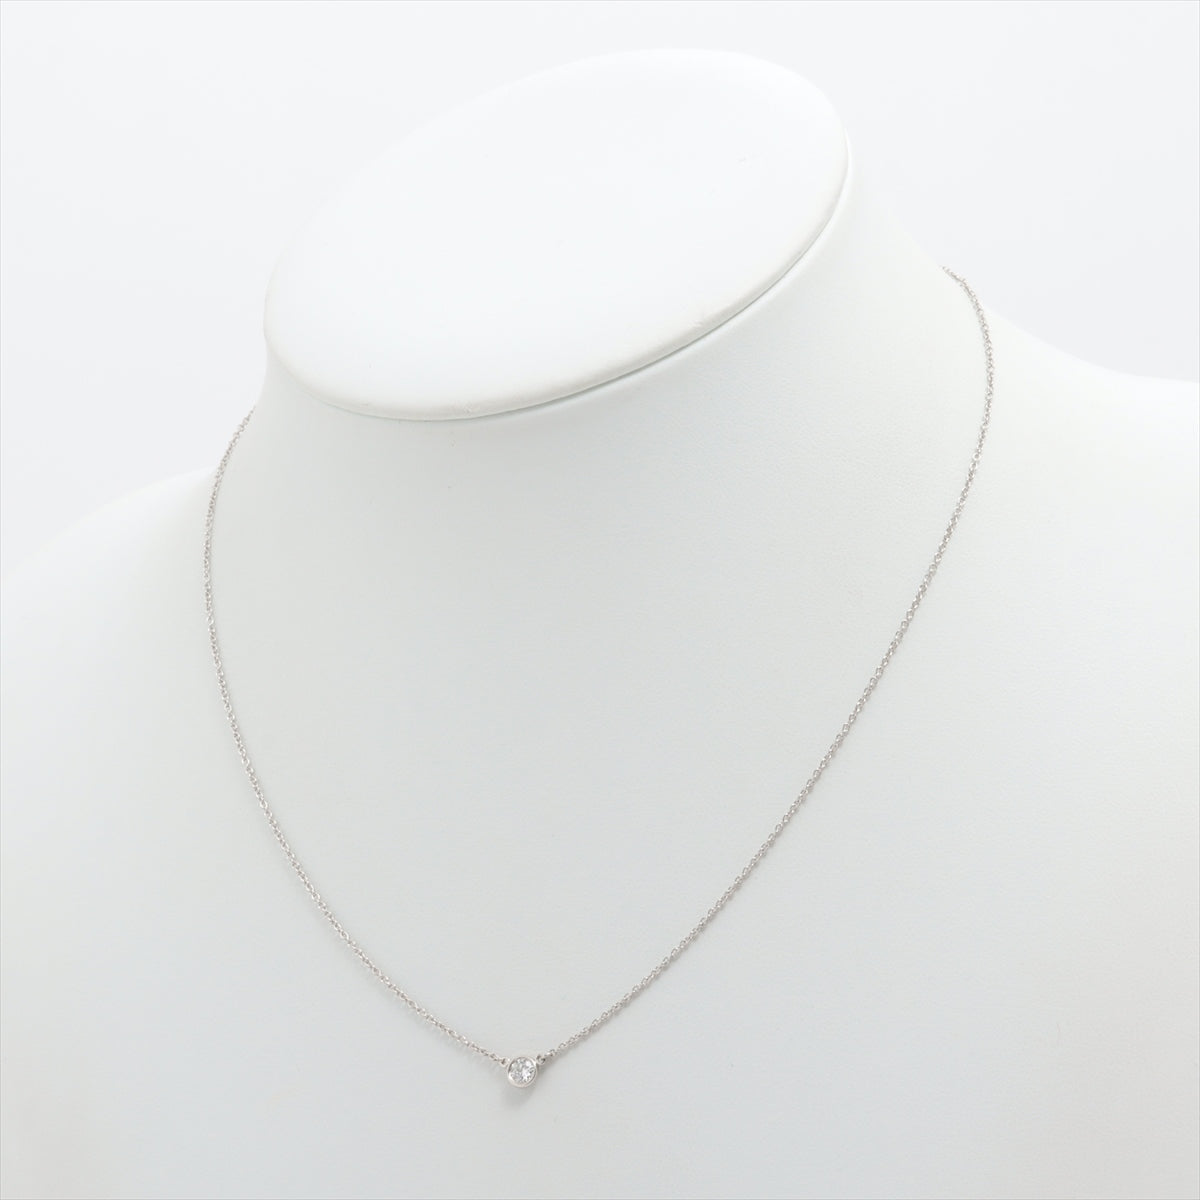 Tiffany Bazaar 1P Diamond Necklace Pt950 2.4g diameter approximately 4.45mm